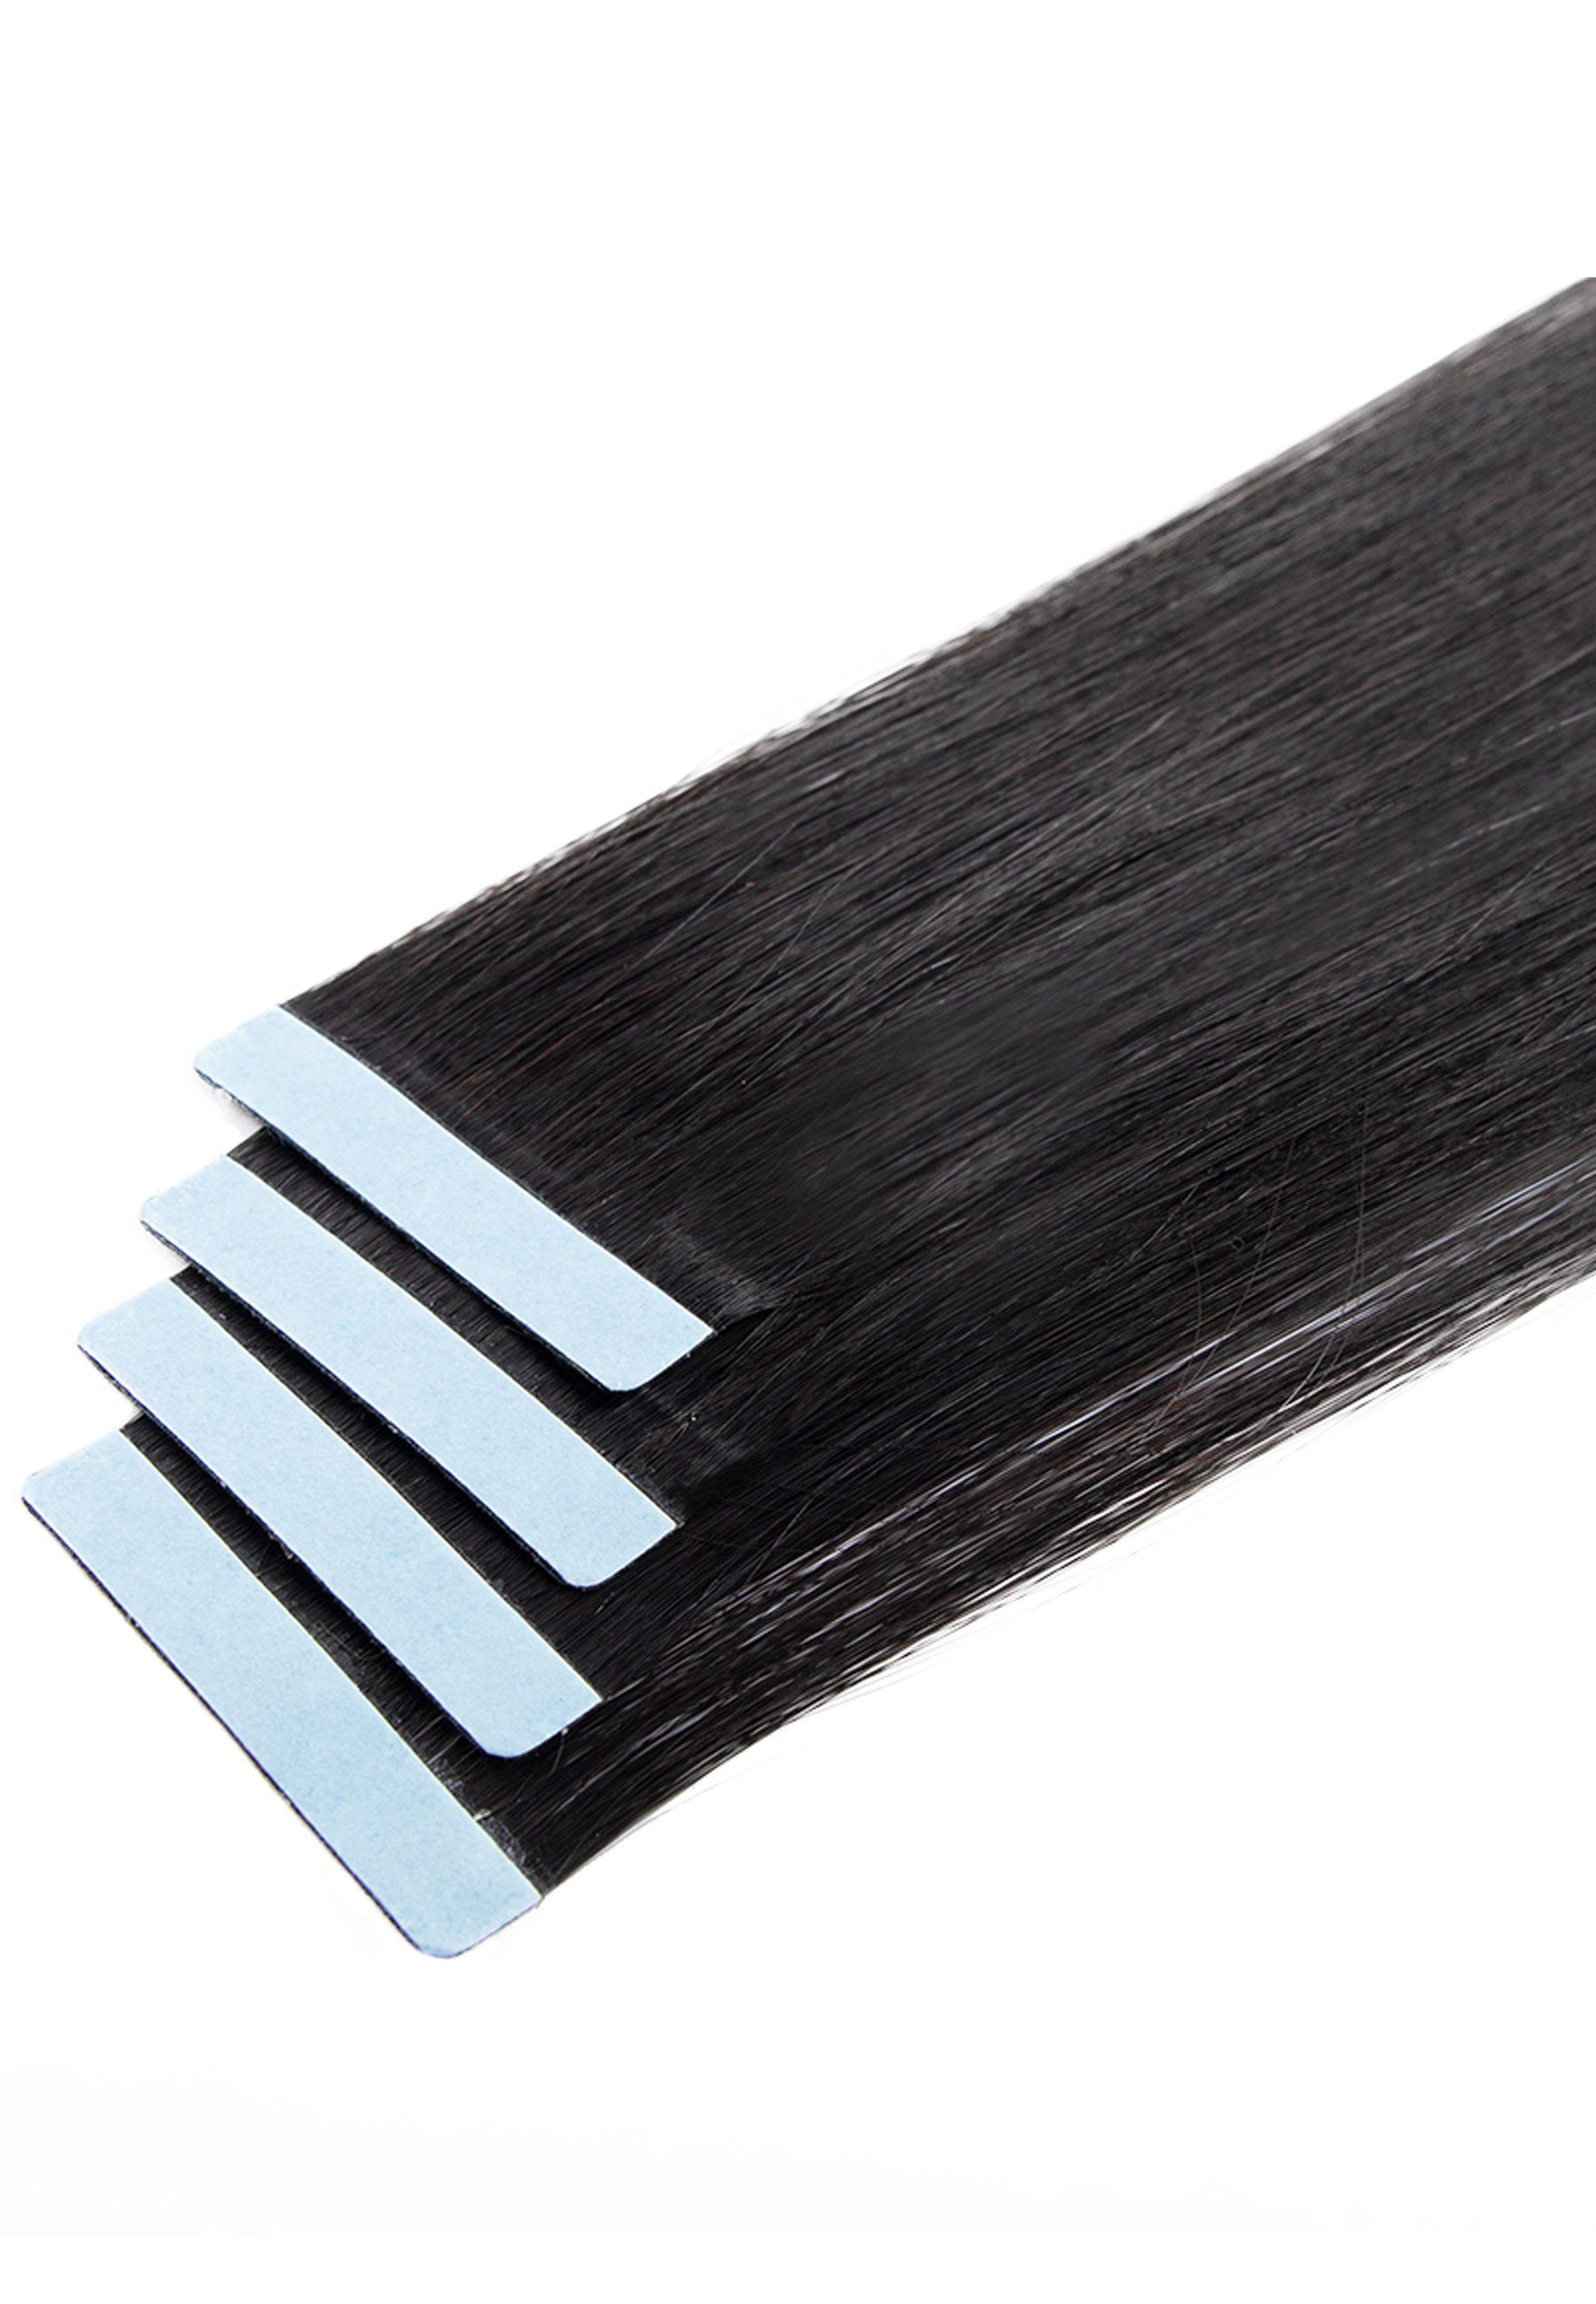 YC Menschenhaar Fashion Echthaar 100 25 cm Double black-50 gr, % #1b natural Hair Echthaar-Extension Remy Drawn Style & On-Extension Skin-Wefts Tape